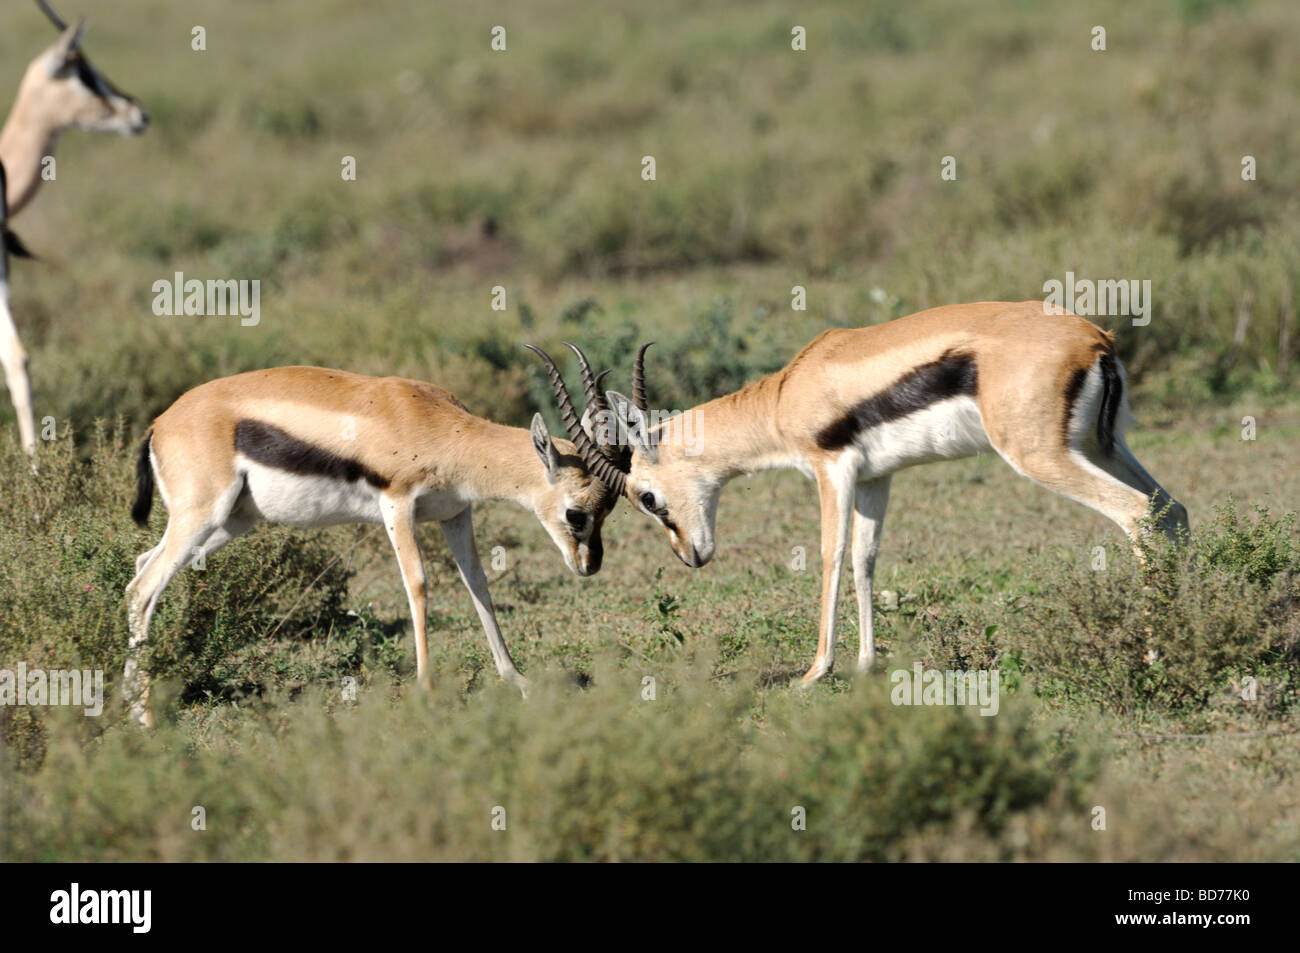 Stock photo of two thomson's gazelle bucks sparring, Ndutu, Tanzania, February 2009. Stock Photo